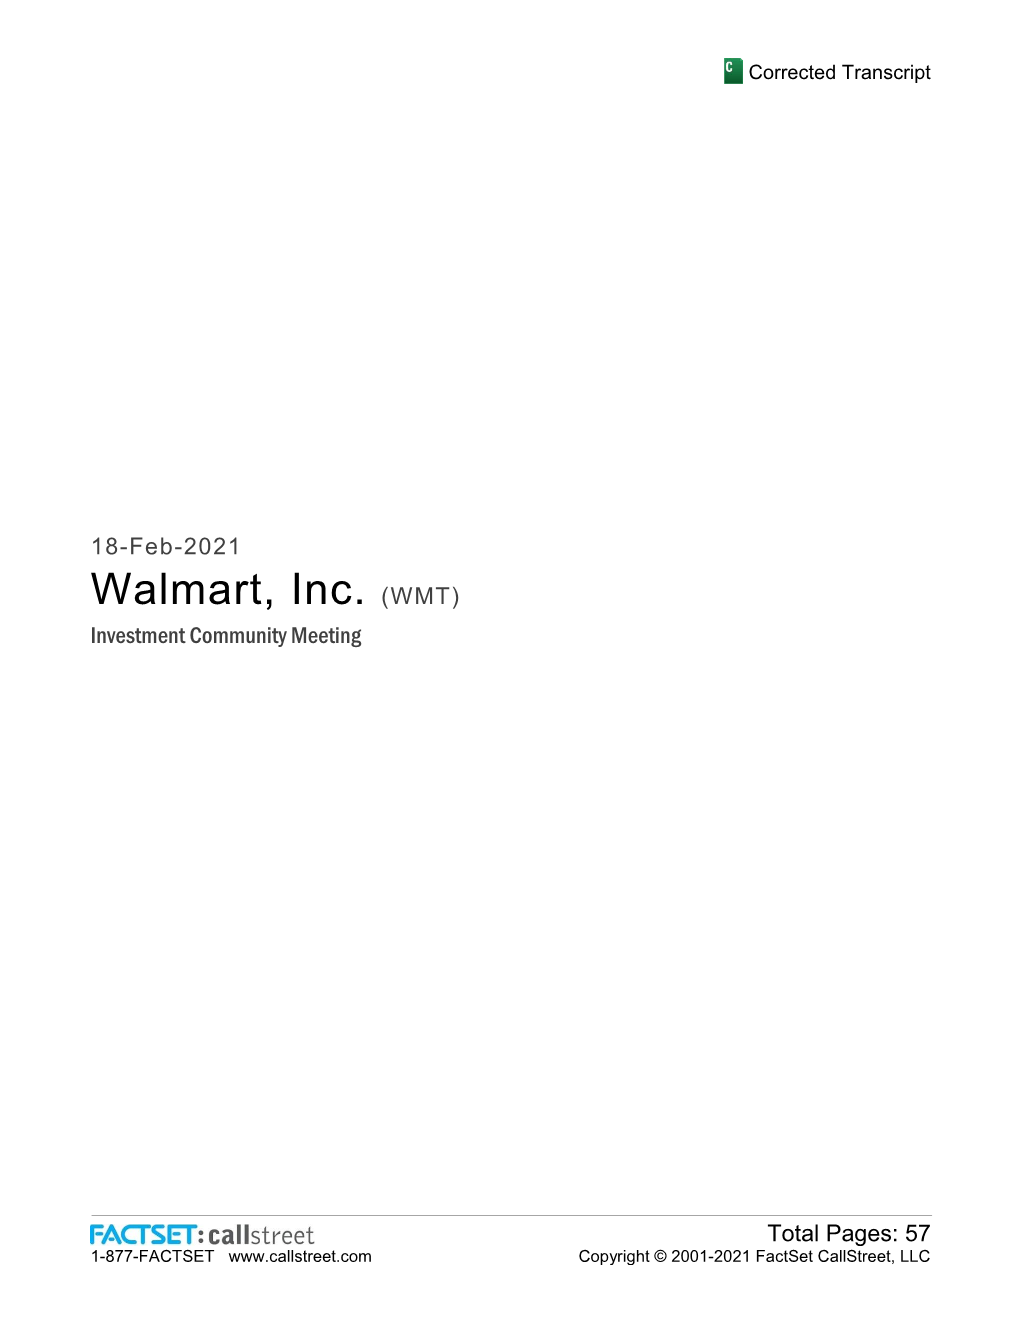 Walmart, Inc. (WMT) Investment Community Meeting